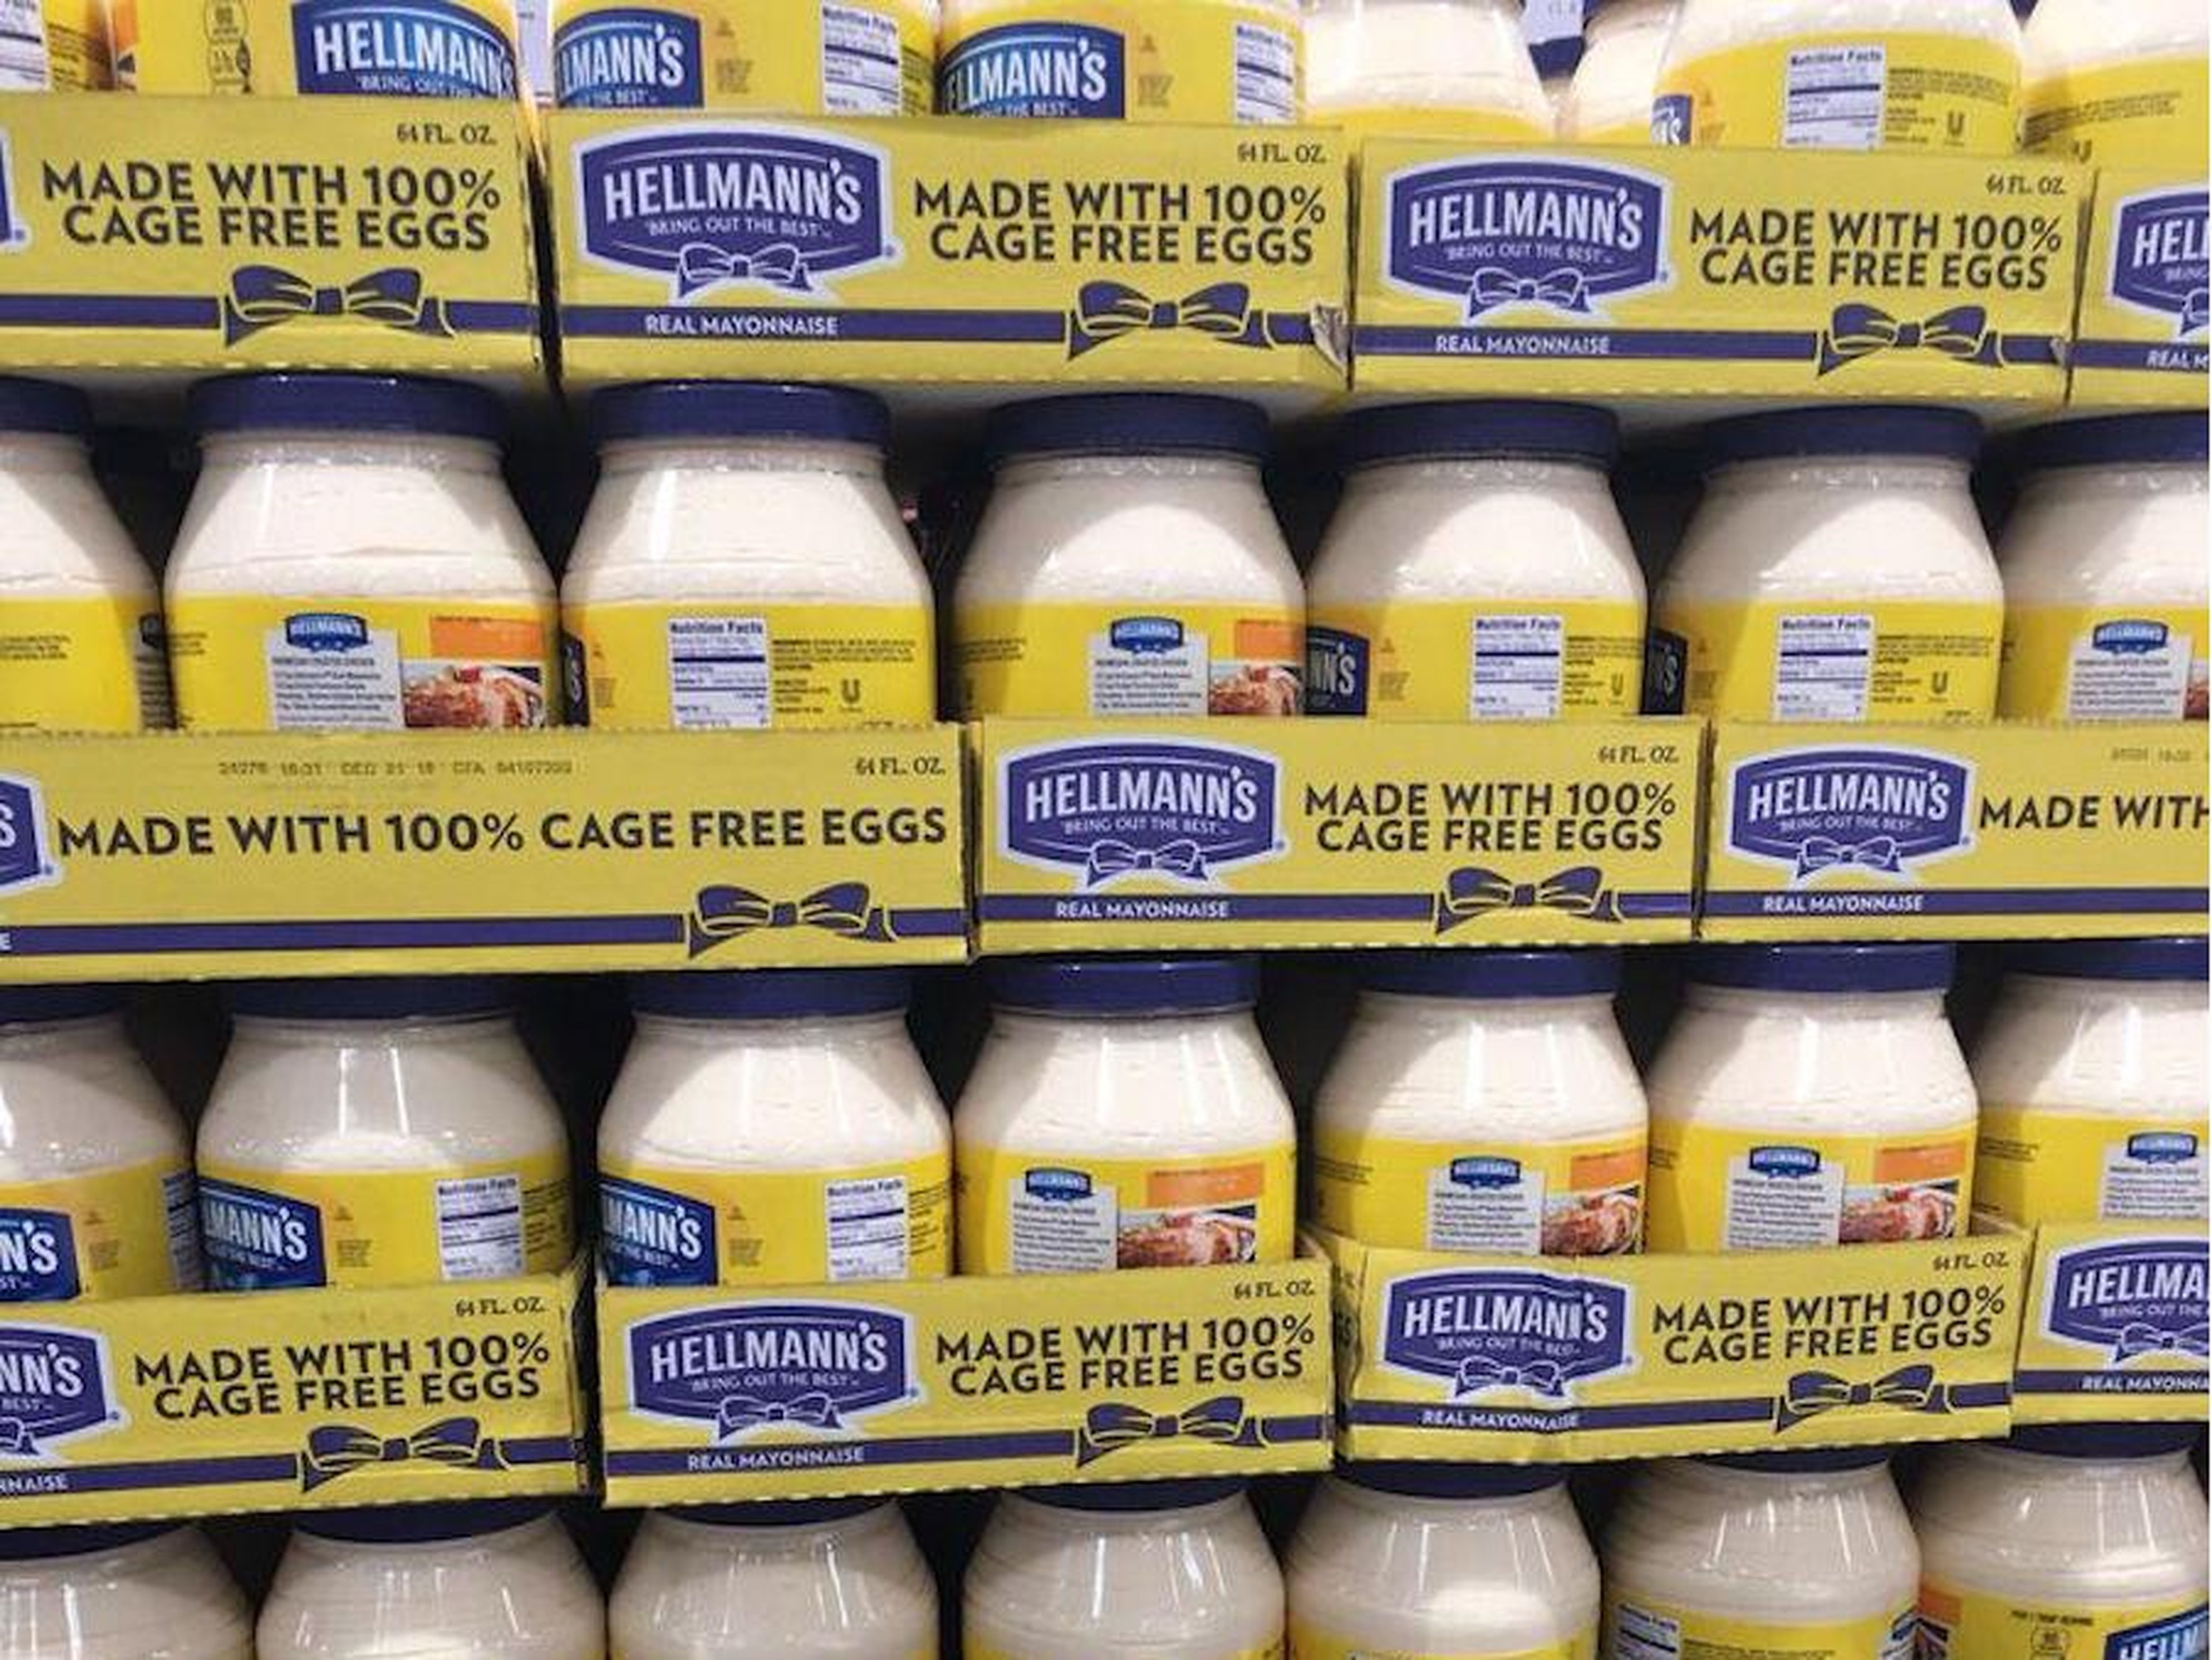 The gallon-sized mayonnaise jars